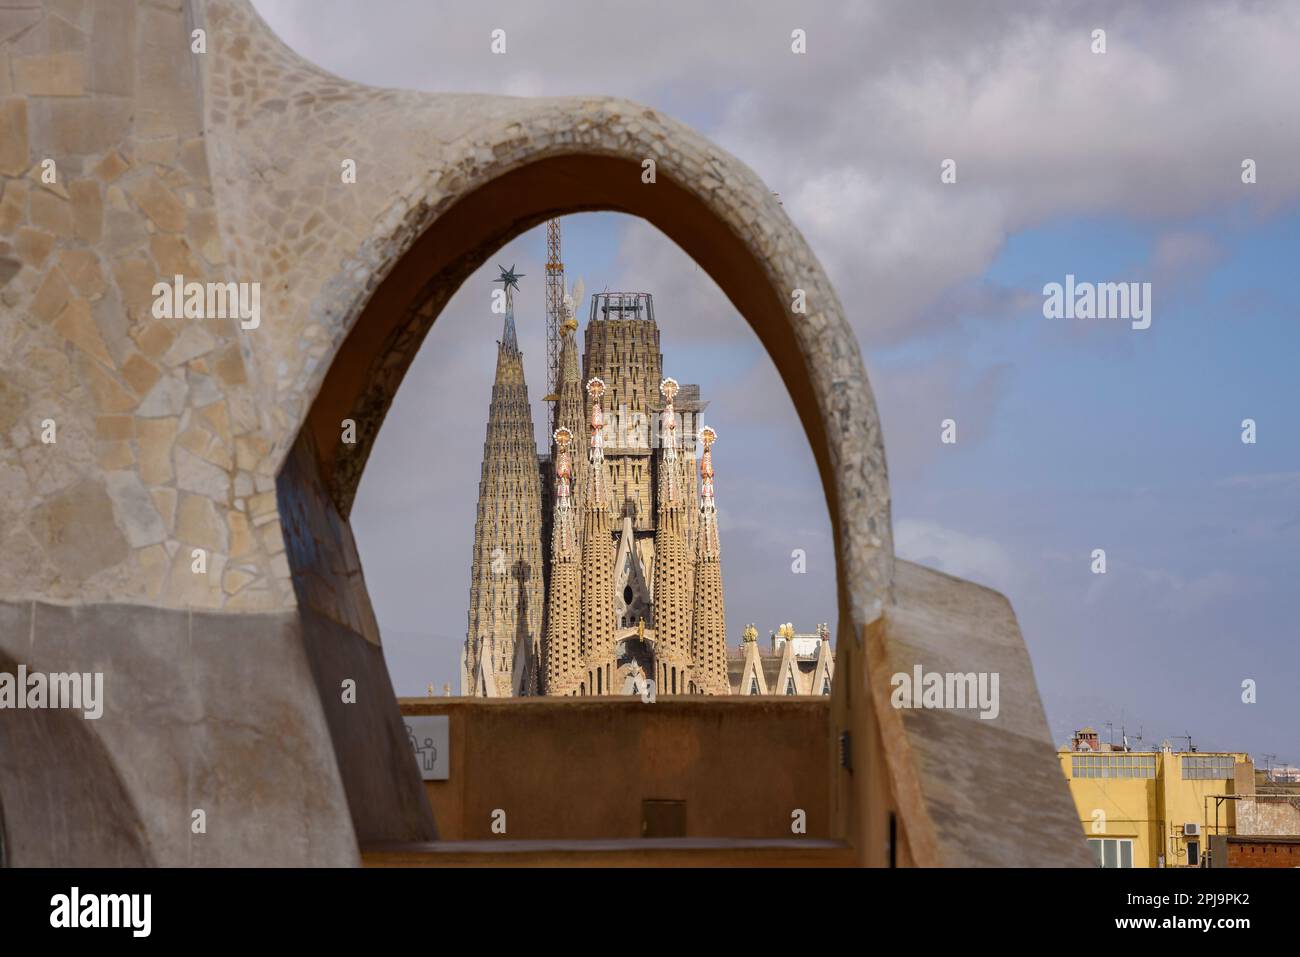 The Passion Facade of the Sagrada Família seen behind an arch of the Casa Milà - La Pedrera (Barcelona, Catalonia, Spain) Stock Photo